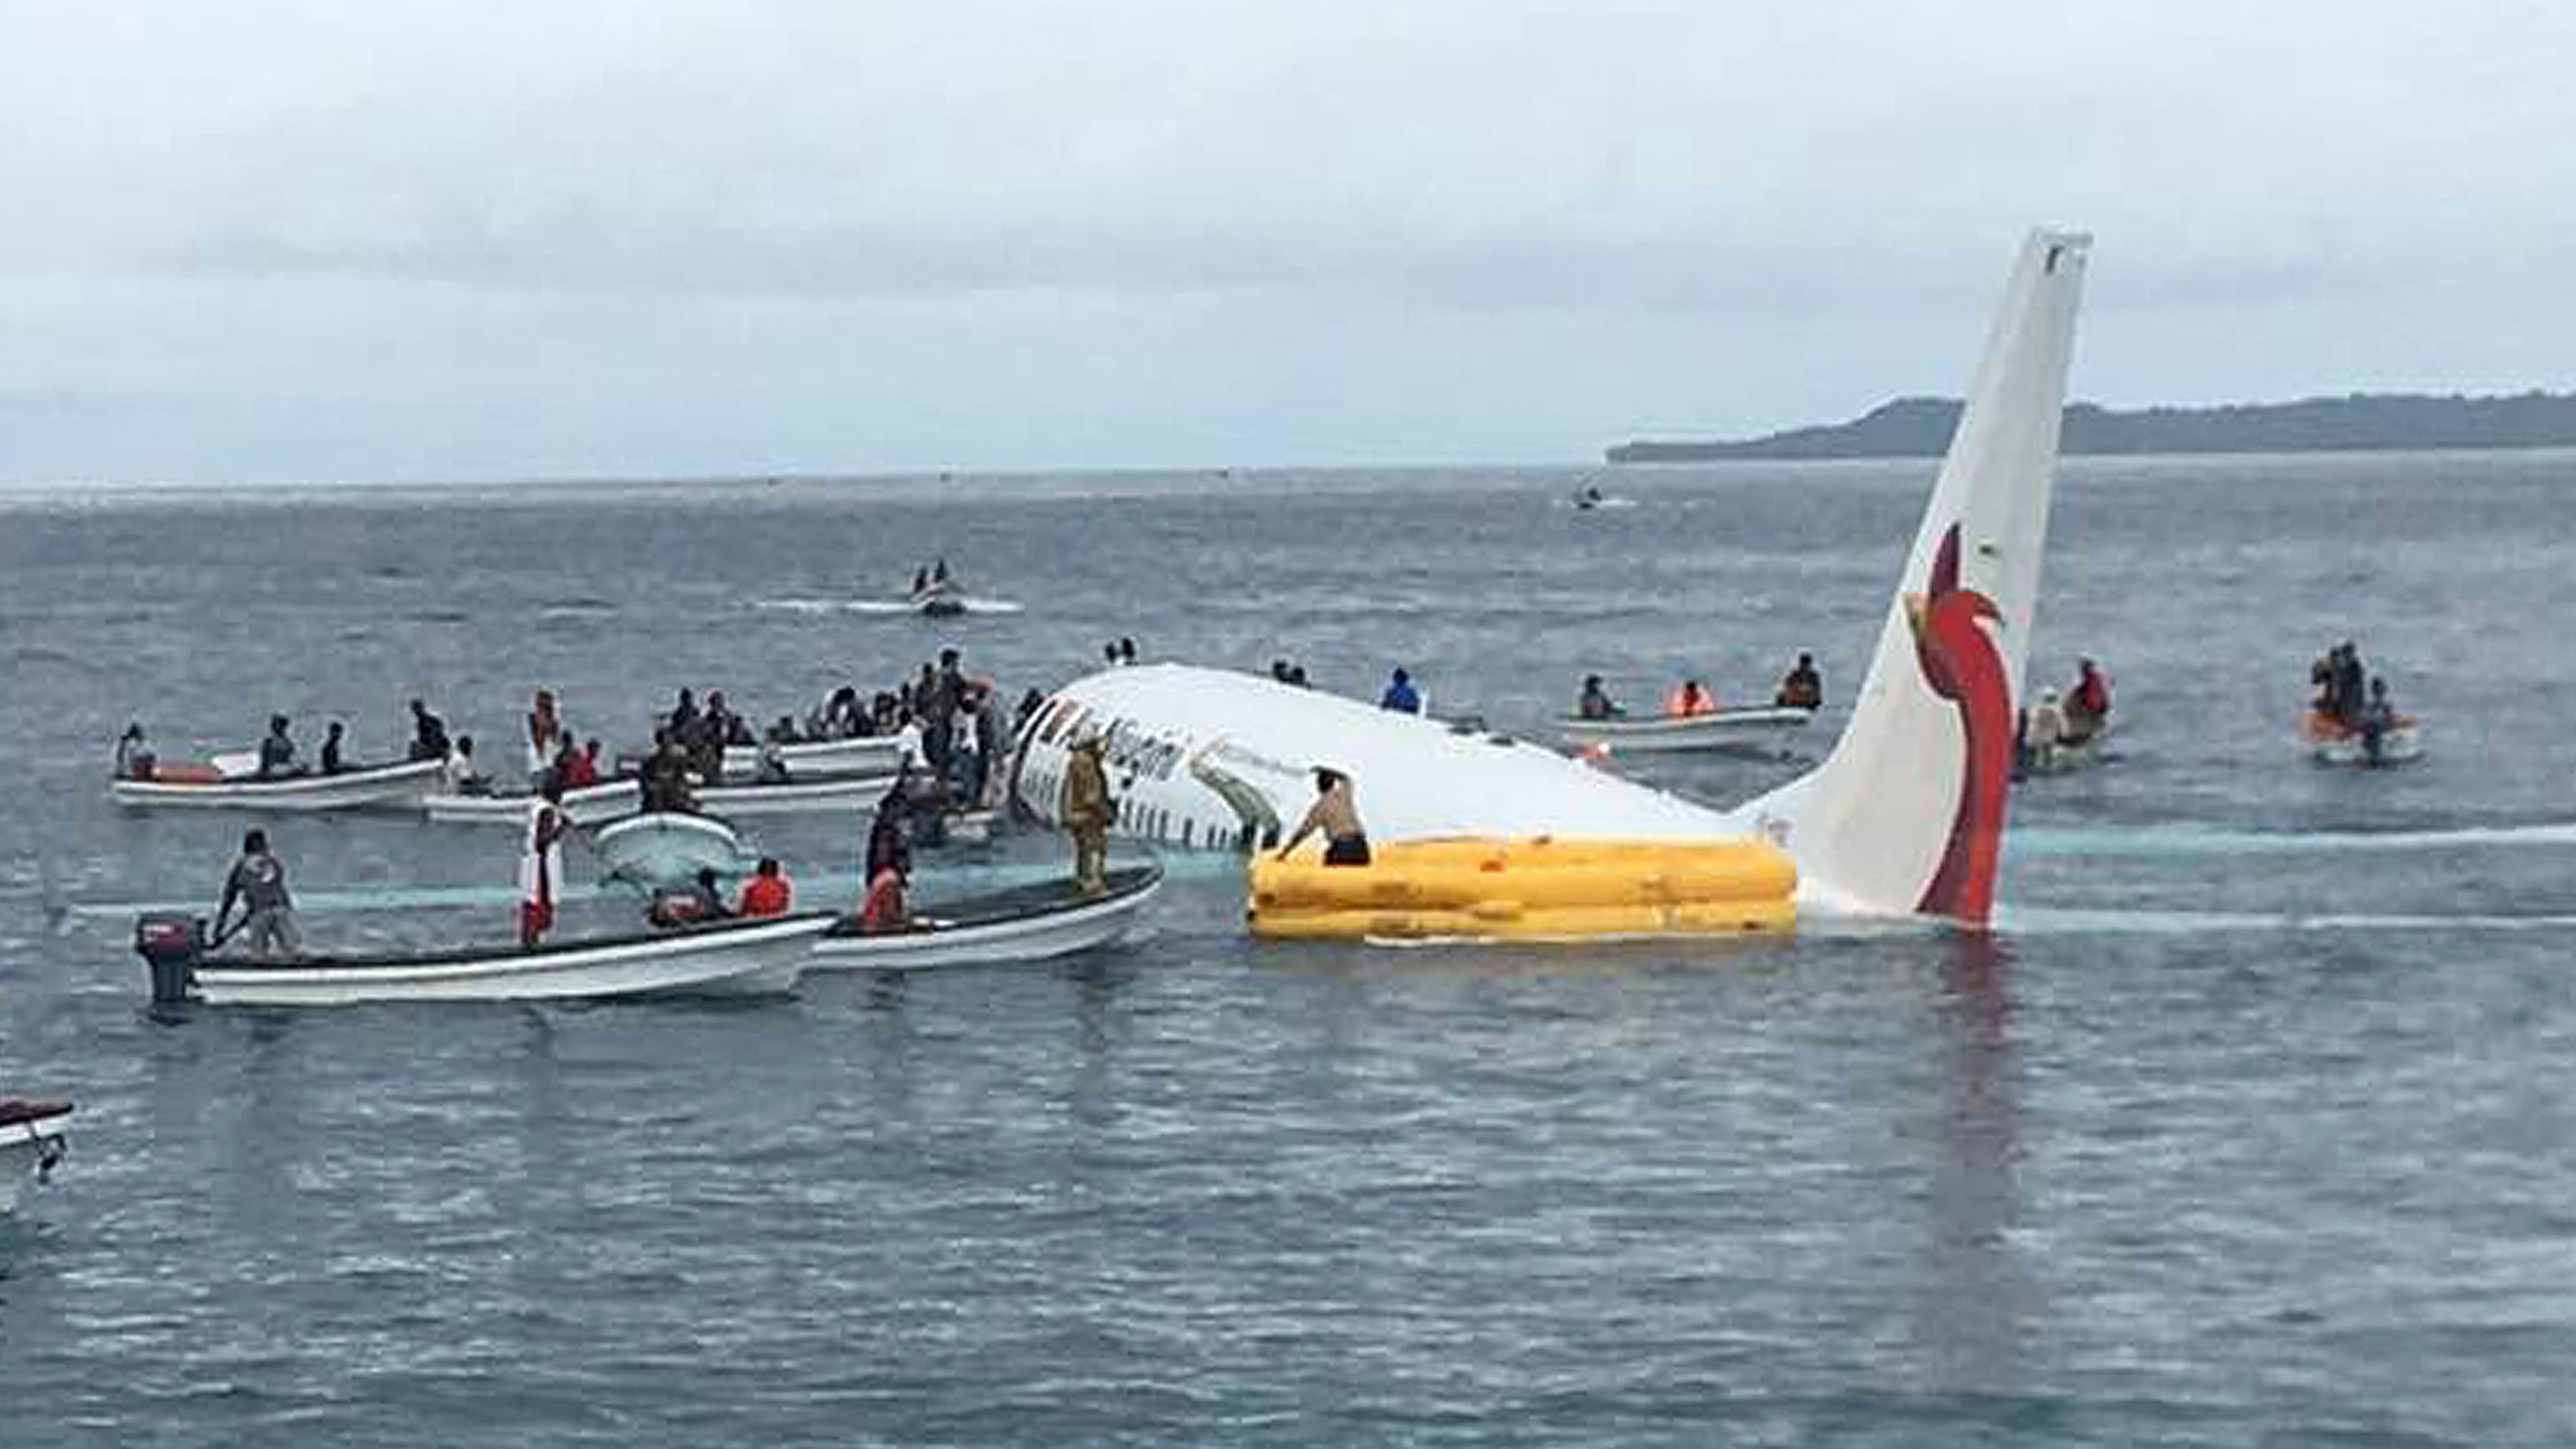 Plane crash in the ocean.